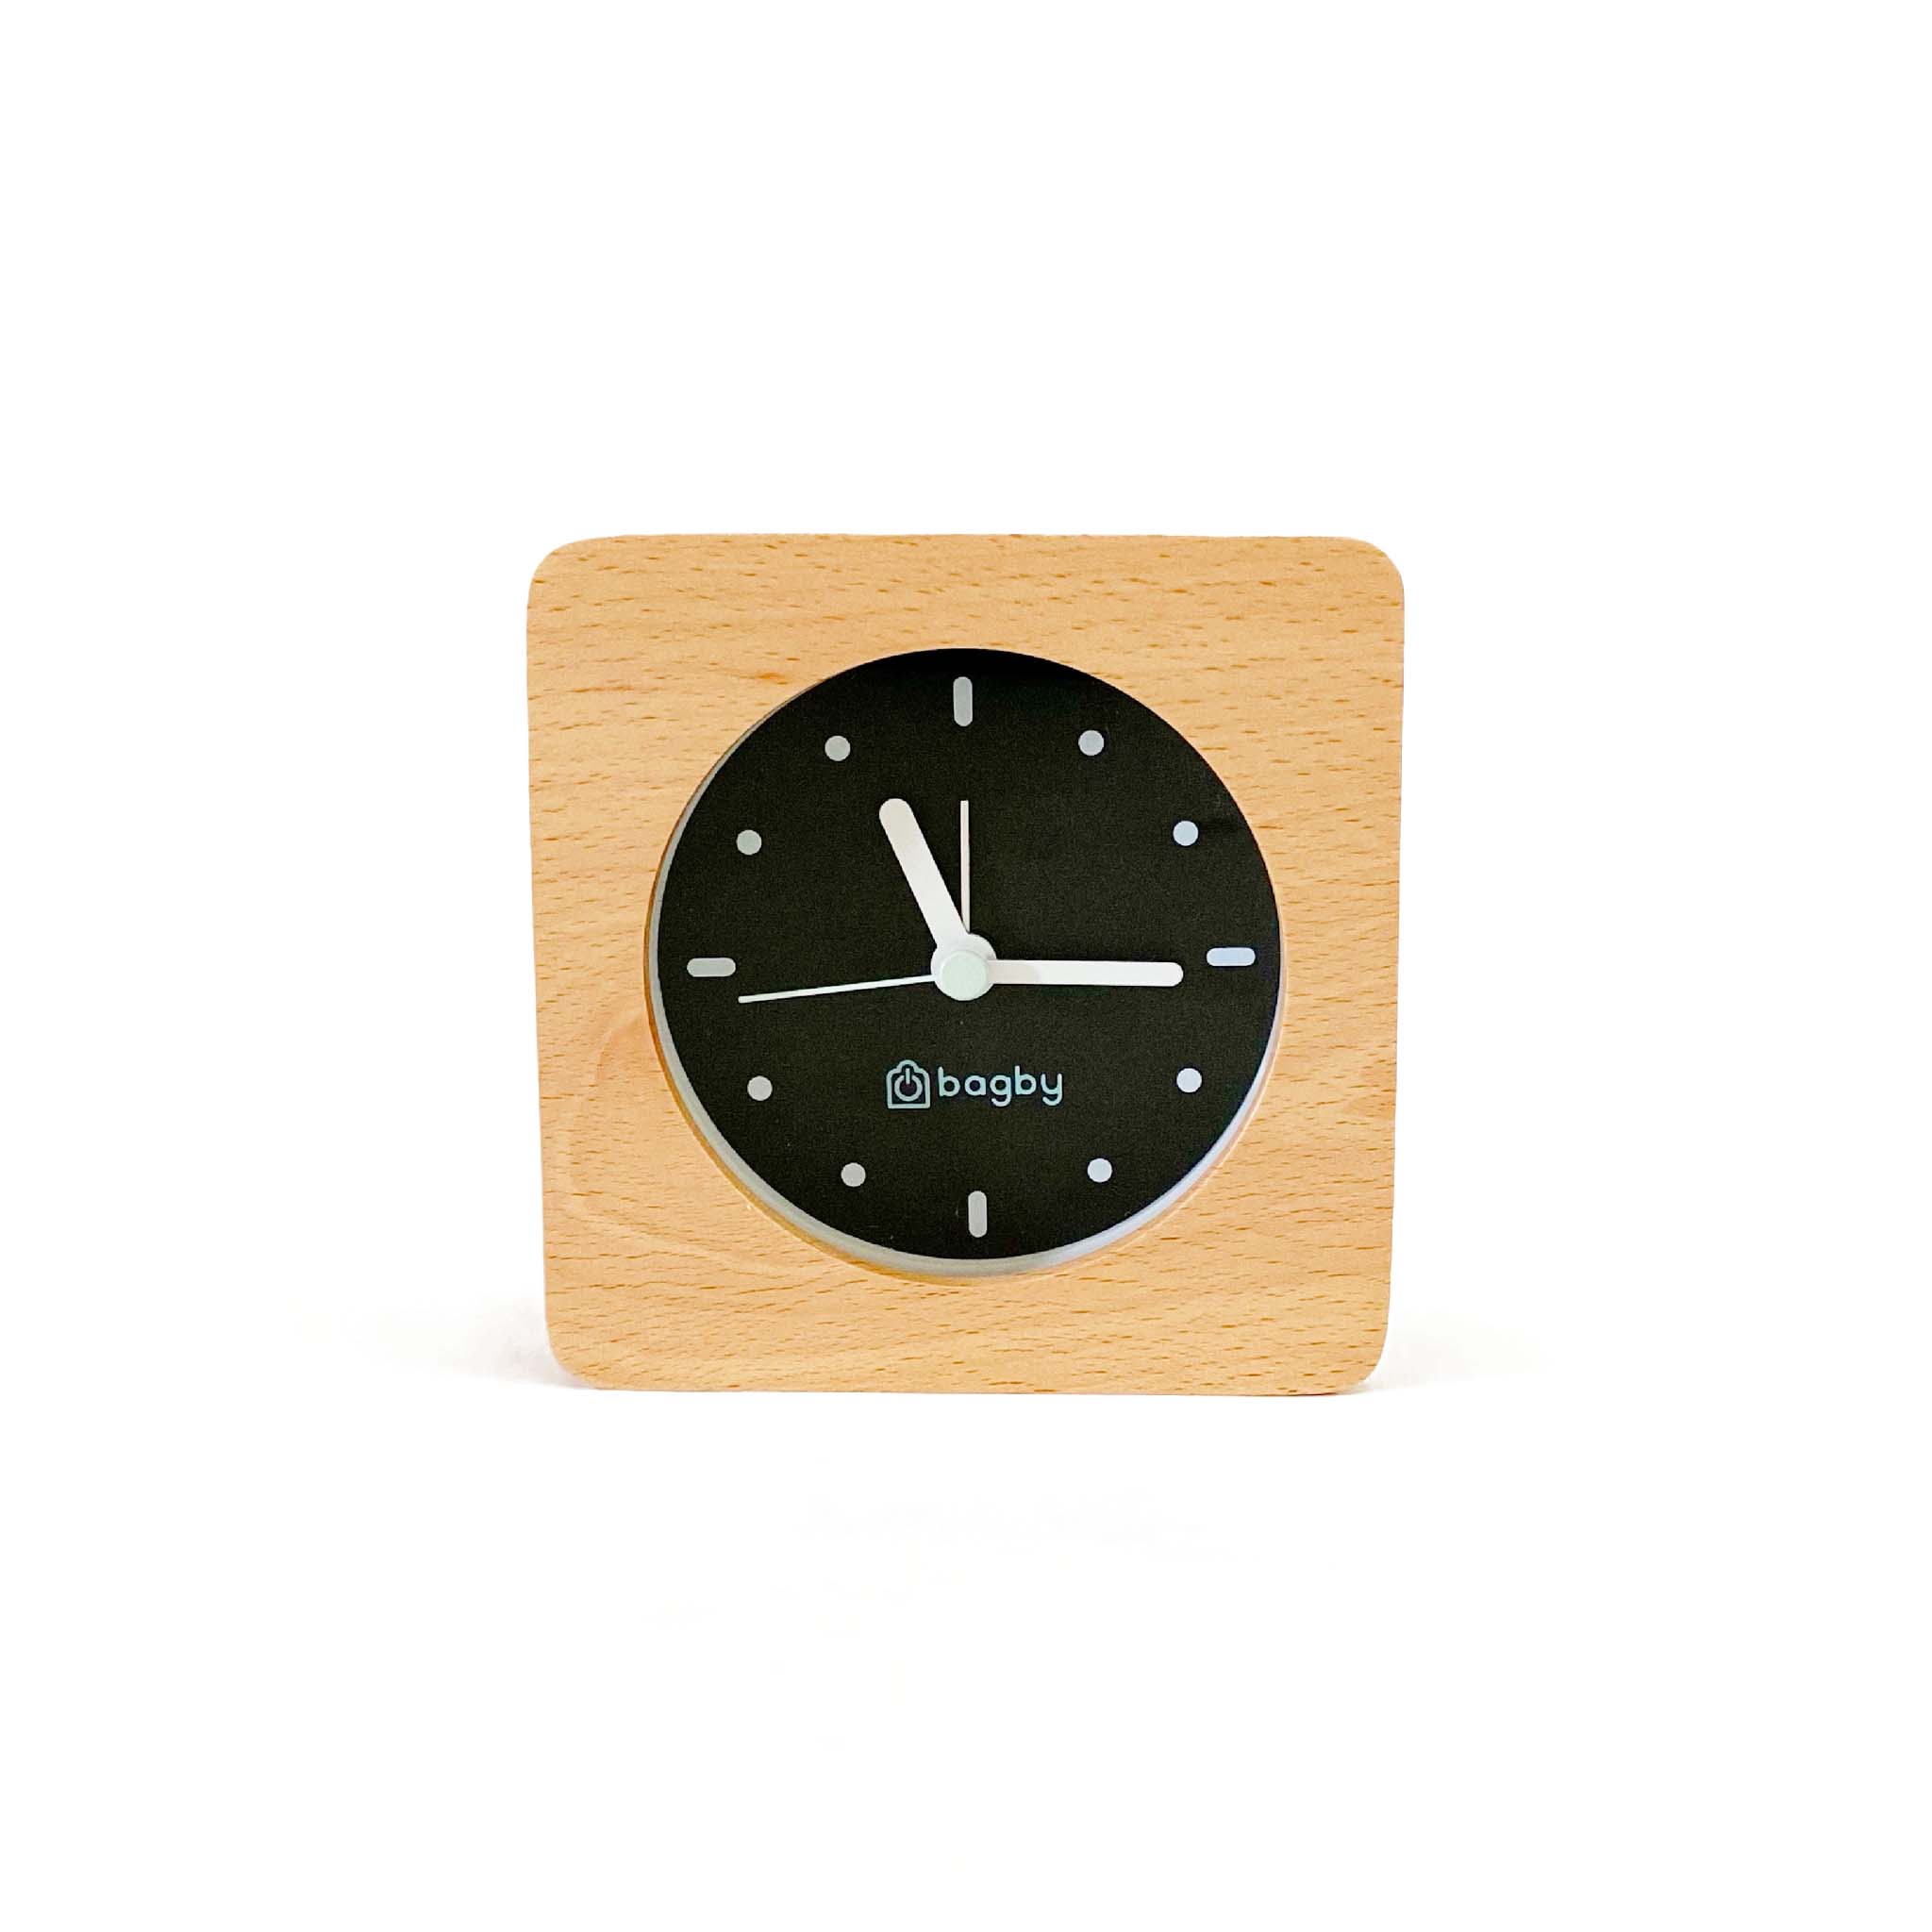 Bagby EMF-Free Minimalist Silent Analog Alarm Clock Natural